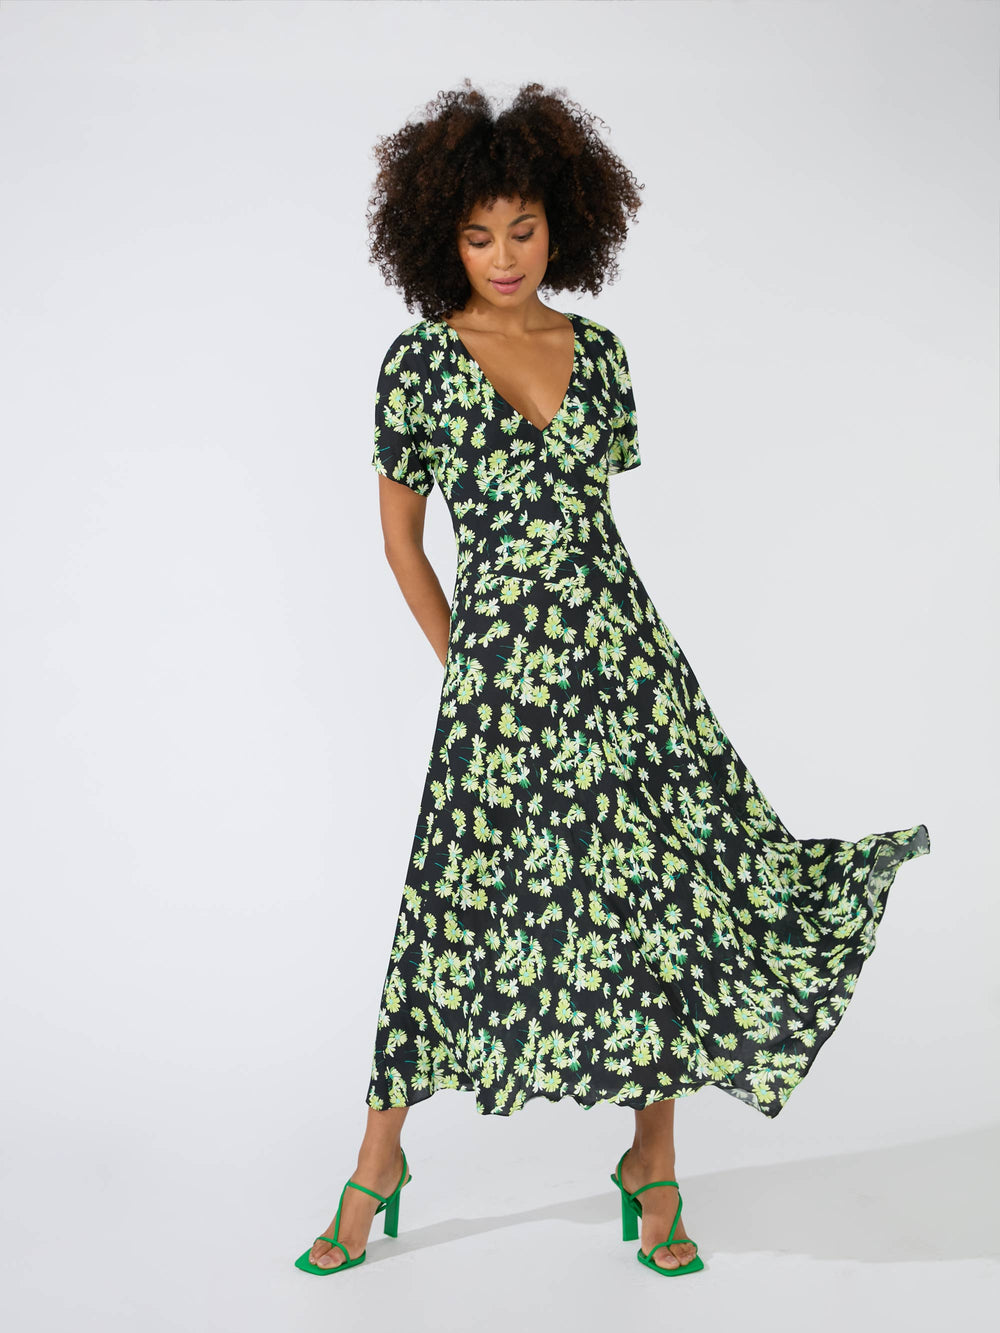 Indigo Flowers Olive Green Plus Size Rockabilly Midi Dress - Jadis